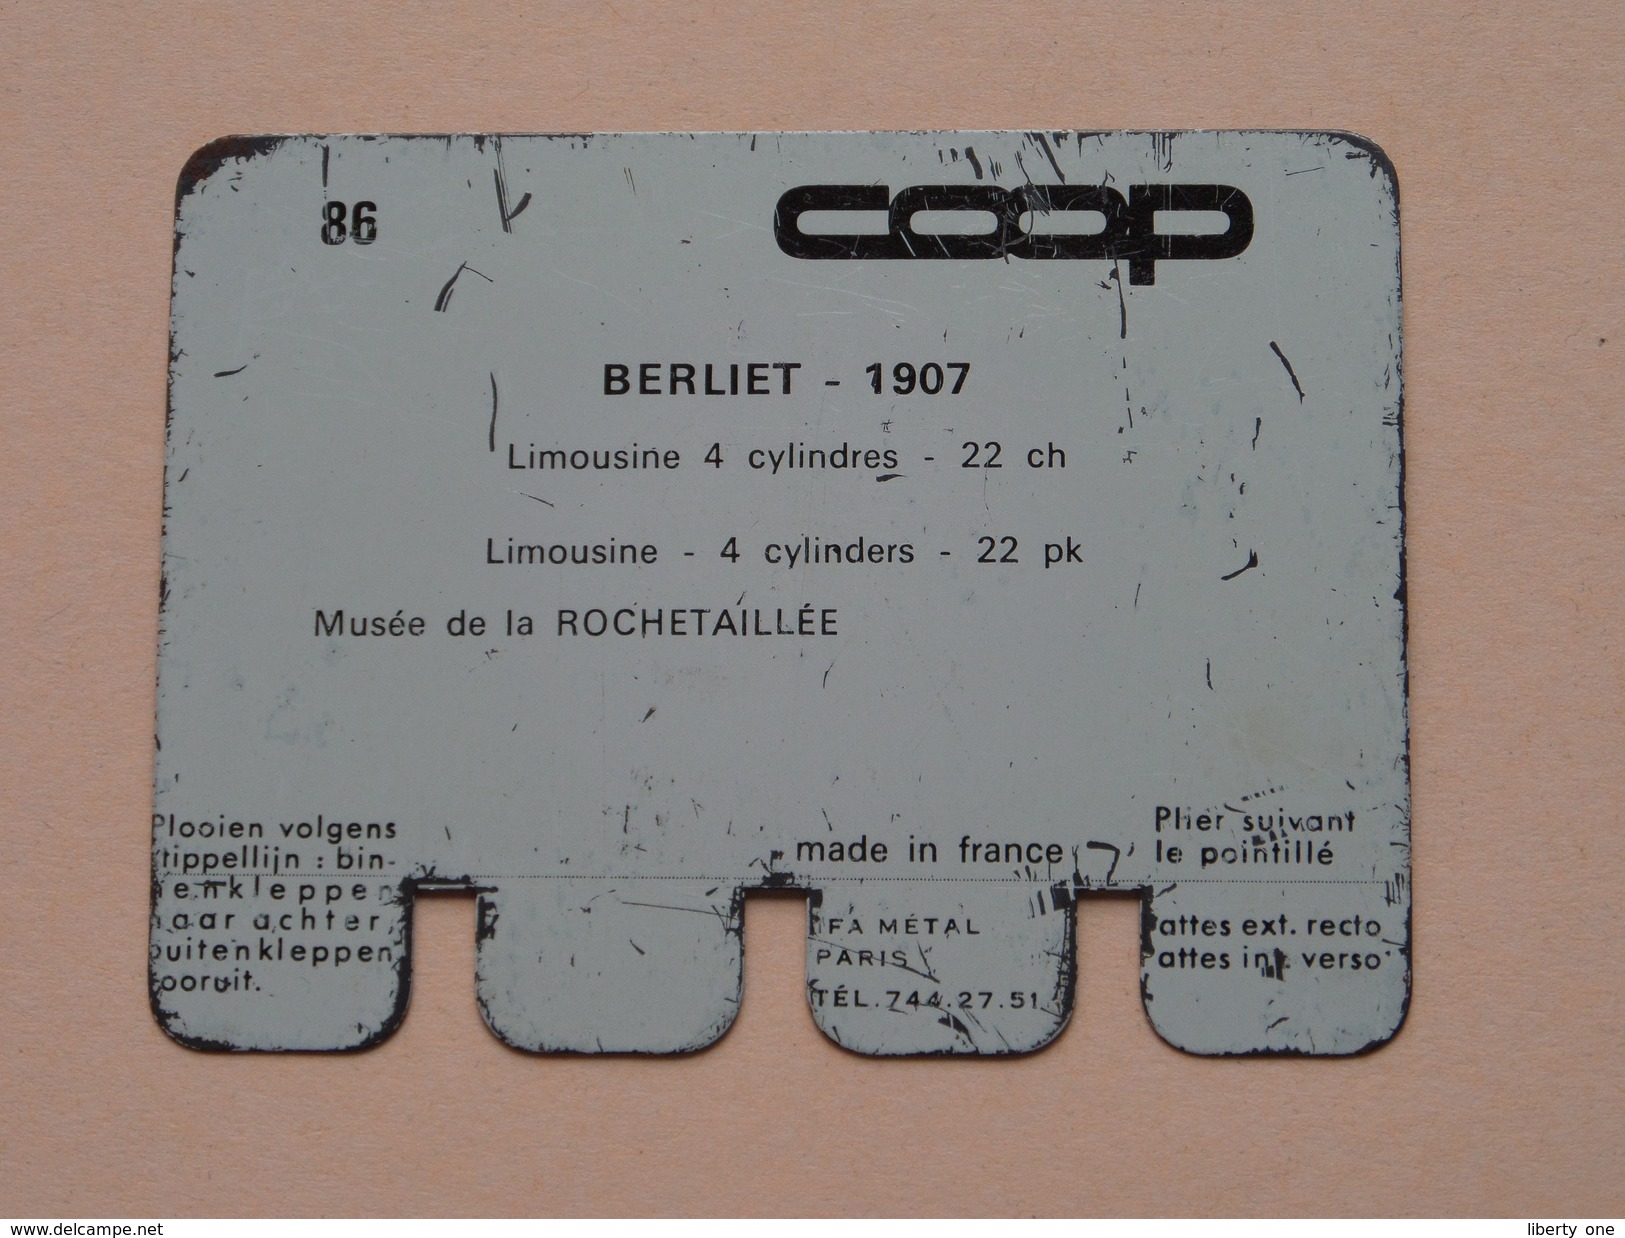 BERLIET 1907 - Coll. N° 86 NL/FR ( Plaquette C O O P - Voir Photo - IFA Metal Paris ) ! - Tin Signs (after1960)